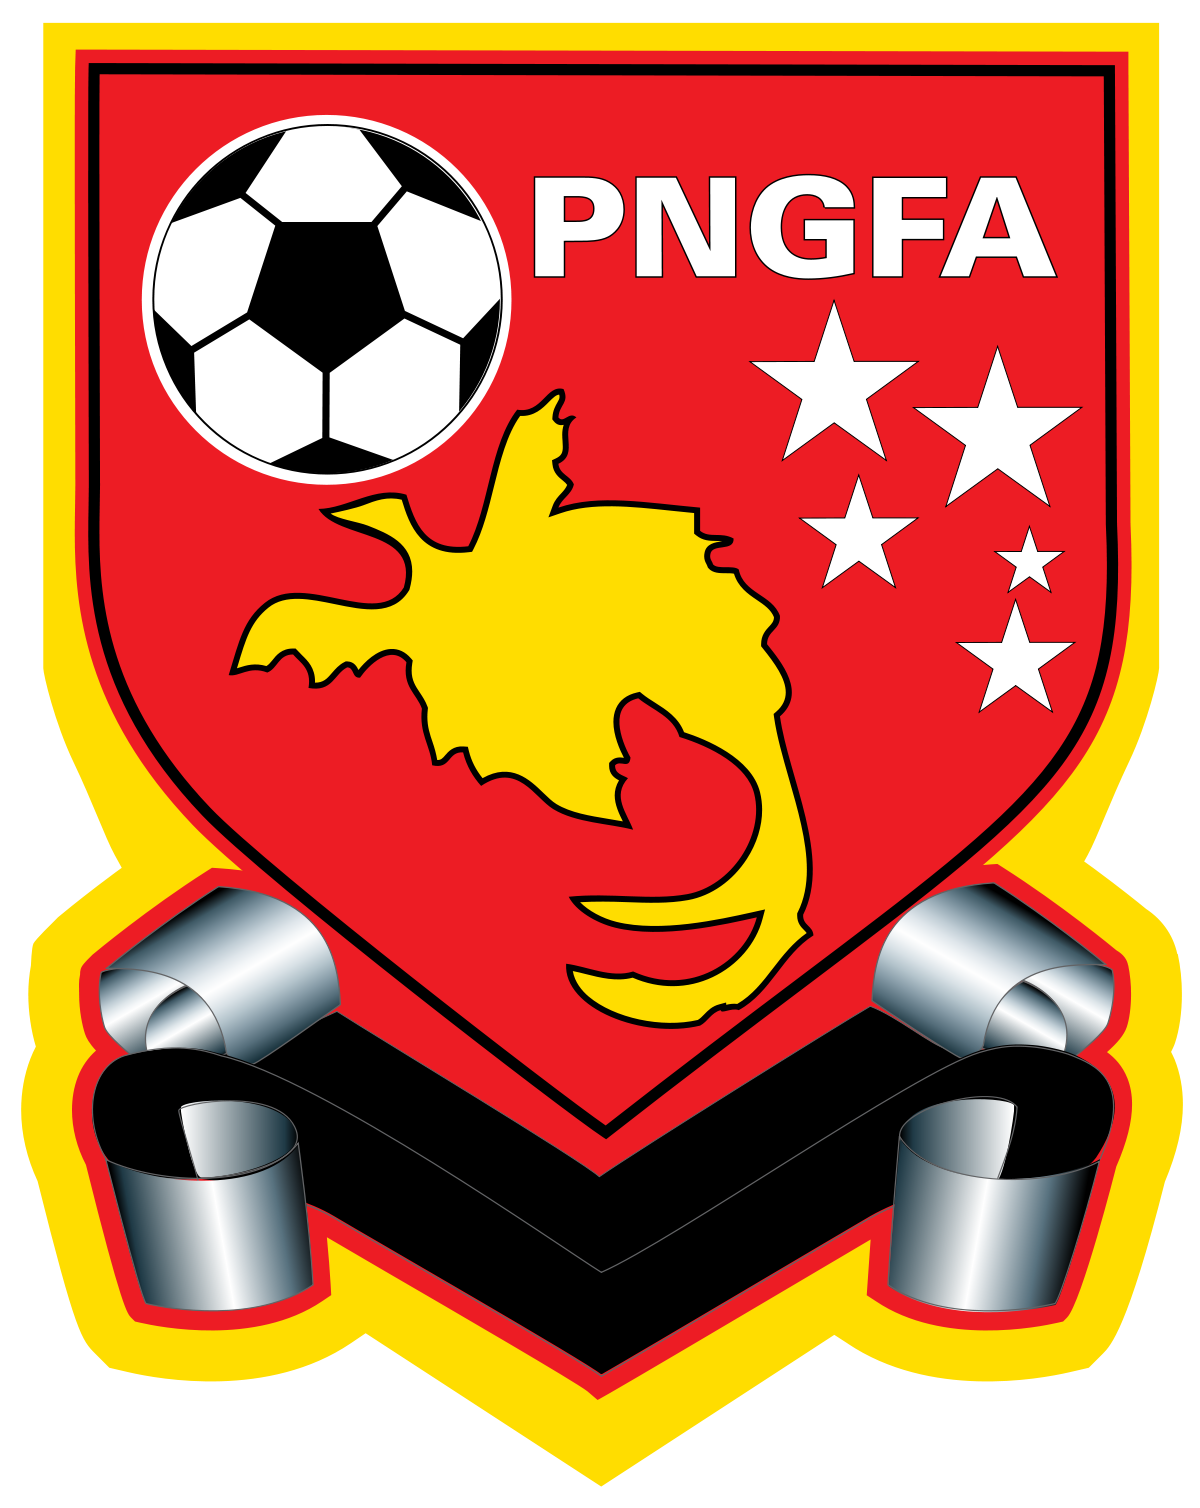 Papua-New Guinea logo